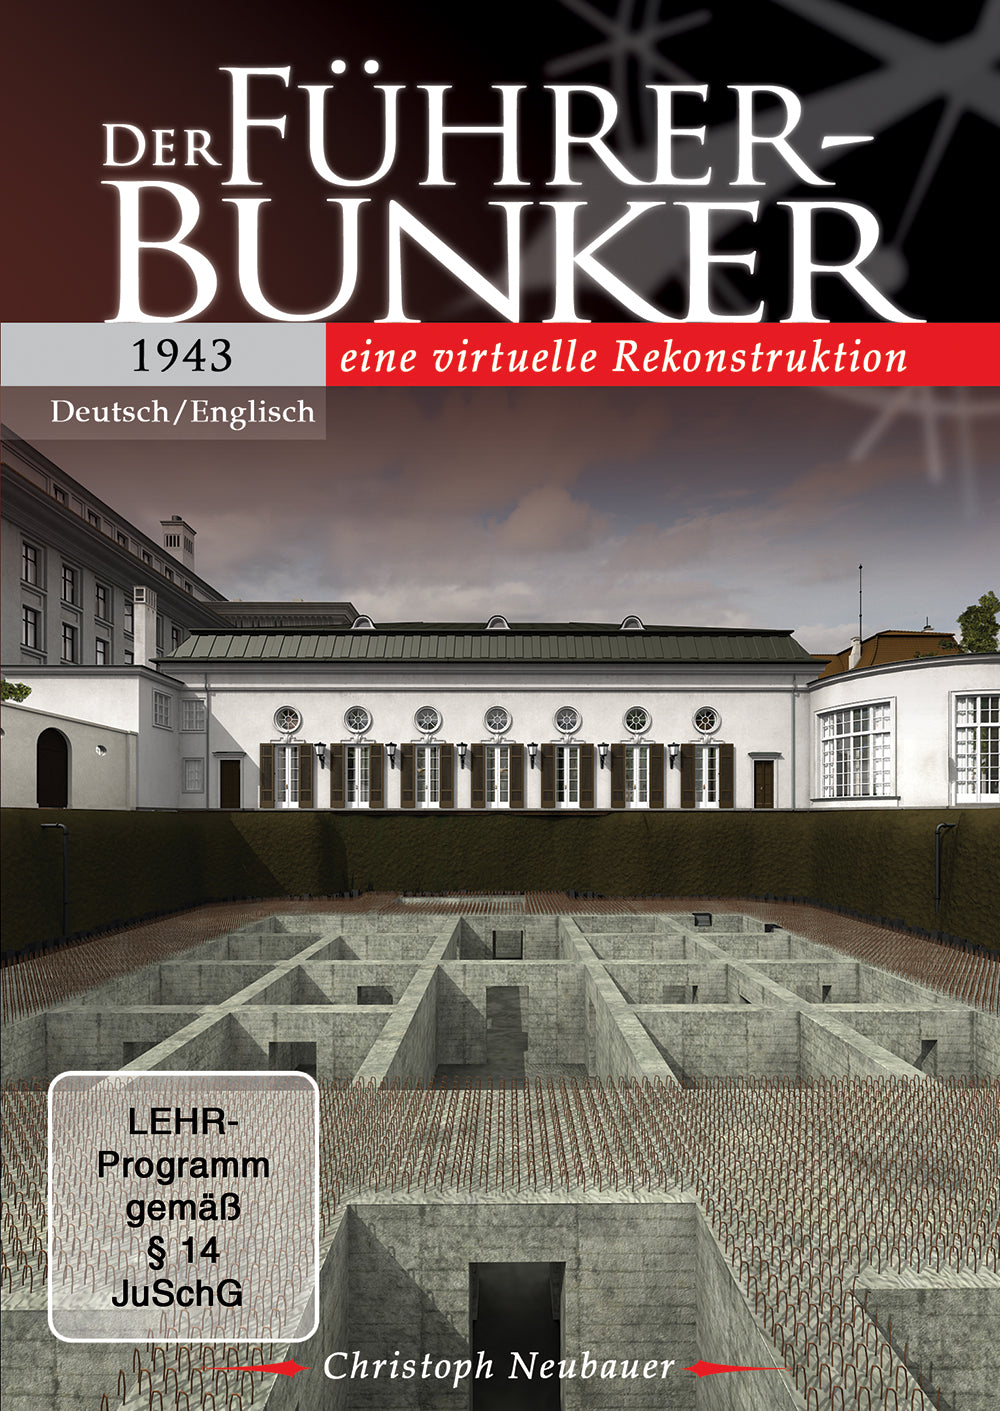 DVD "Der Führerbunker (1943)" (German/English)